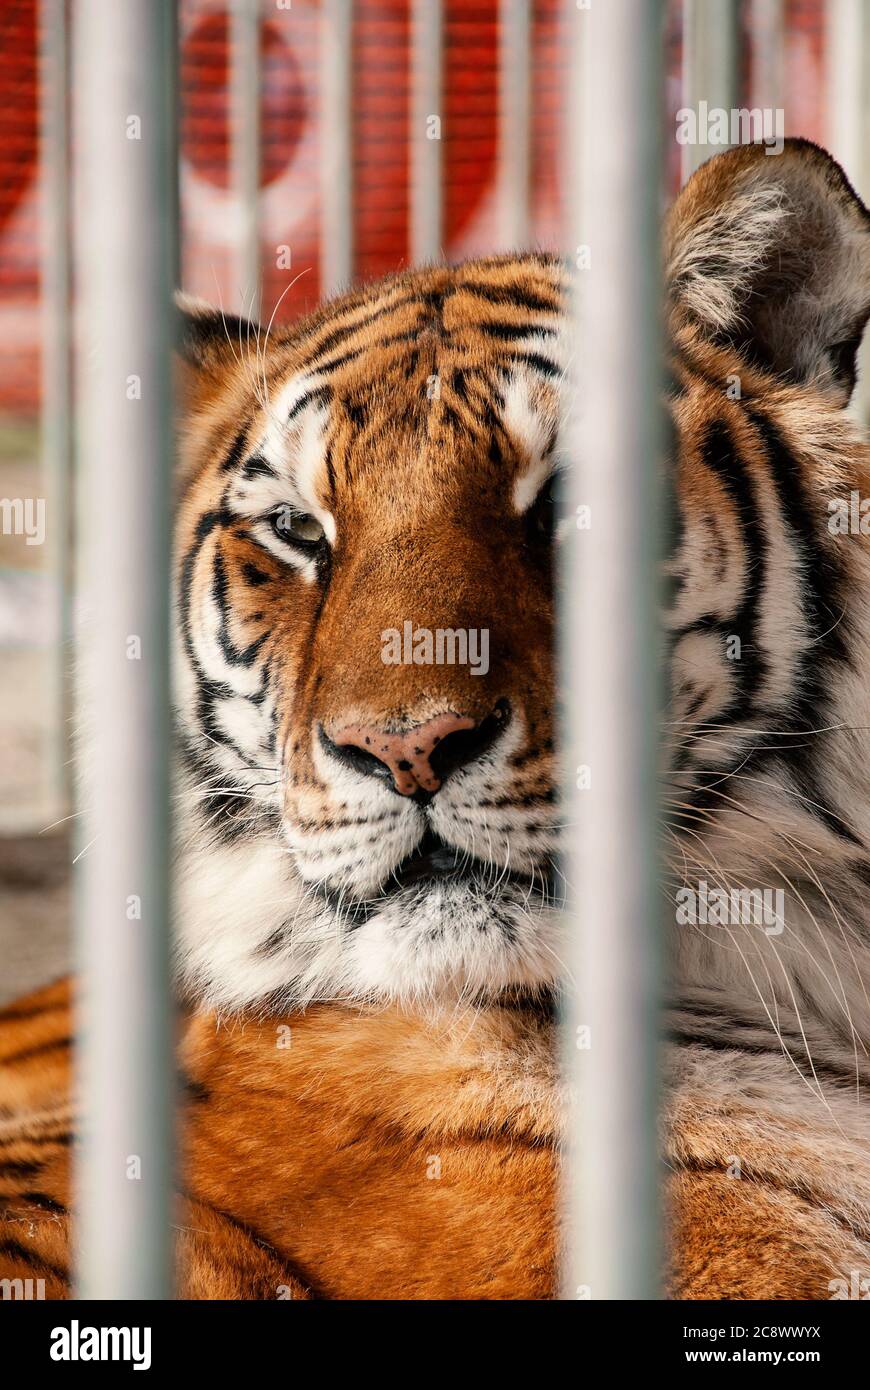 Tigre Relájate en la jaula de un circo ambulante Foto de stock